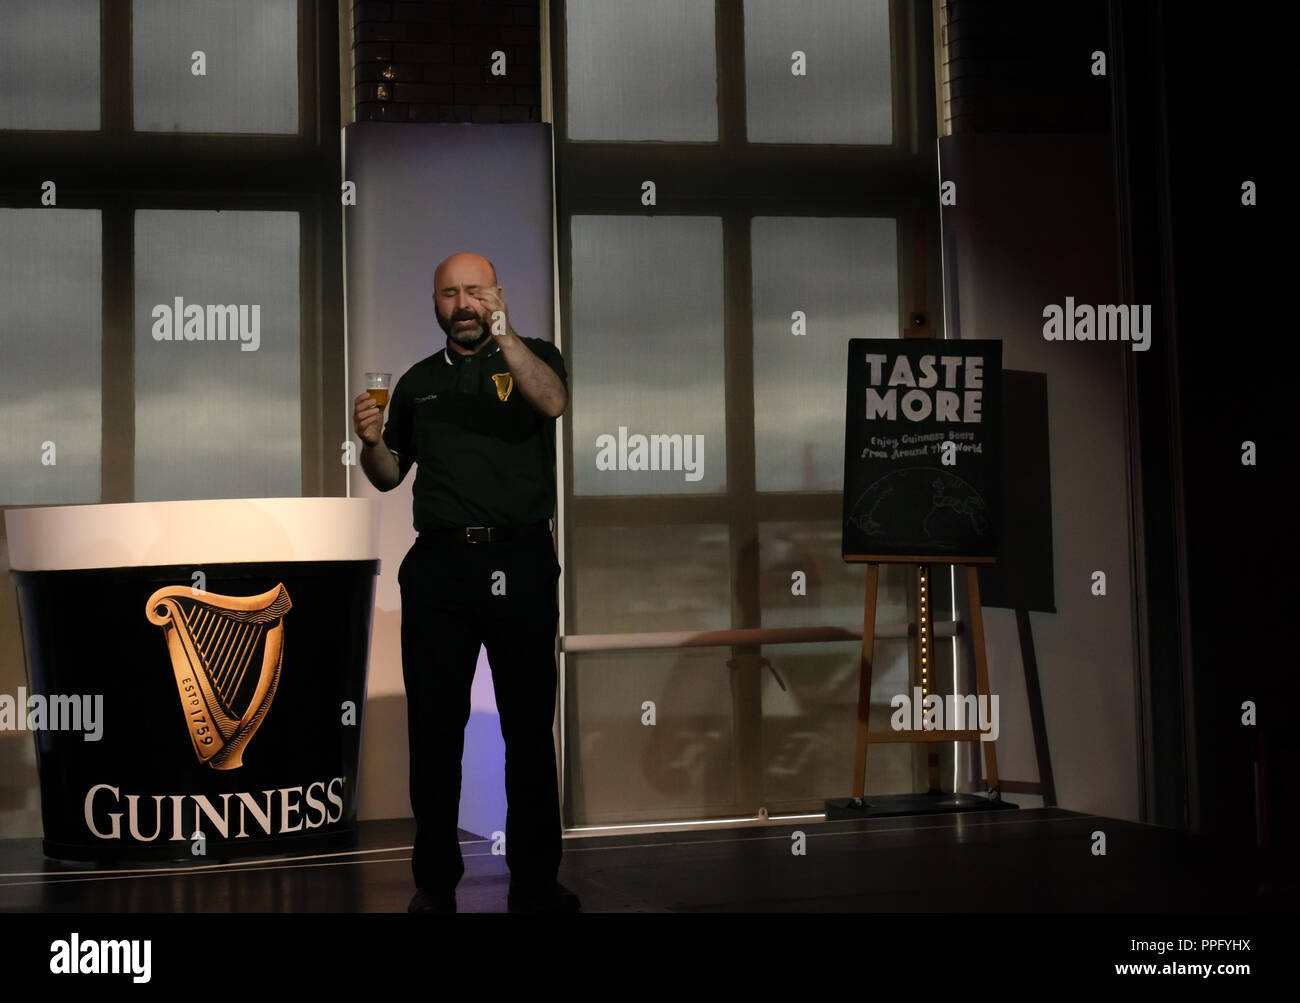 Live-Show im Guinness Storehouse Dublin als Moderatorin demonstriert auf der Bühne das Guinness-Erlebnis Dublin Irland Stockfoto